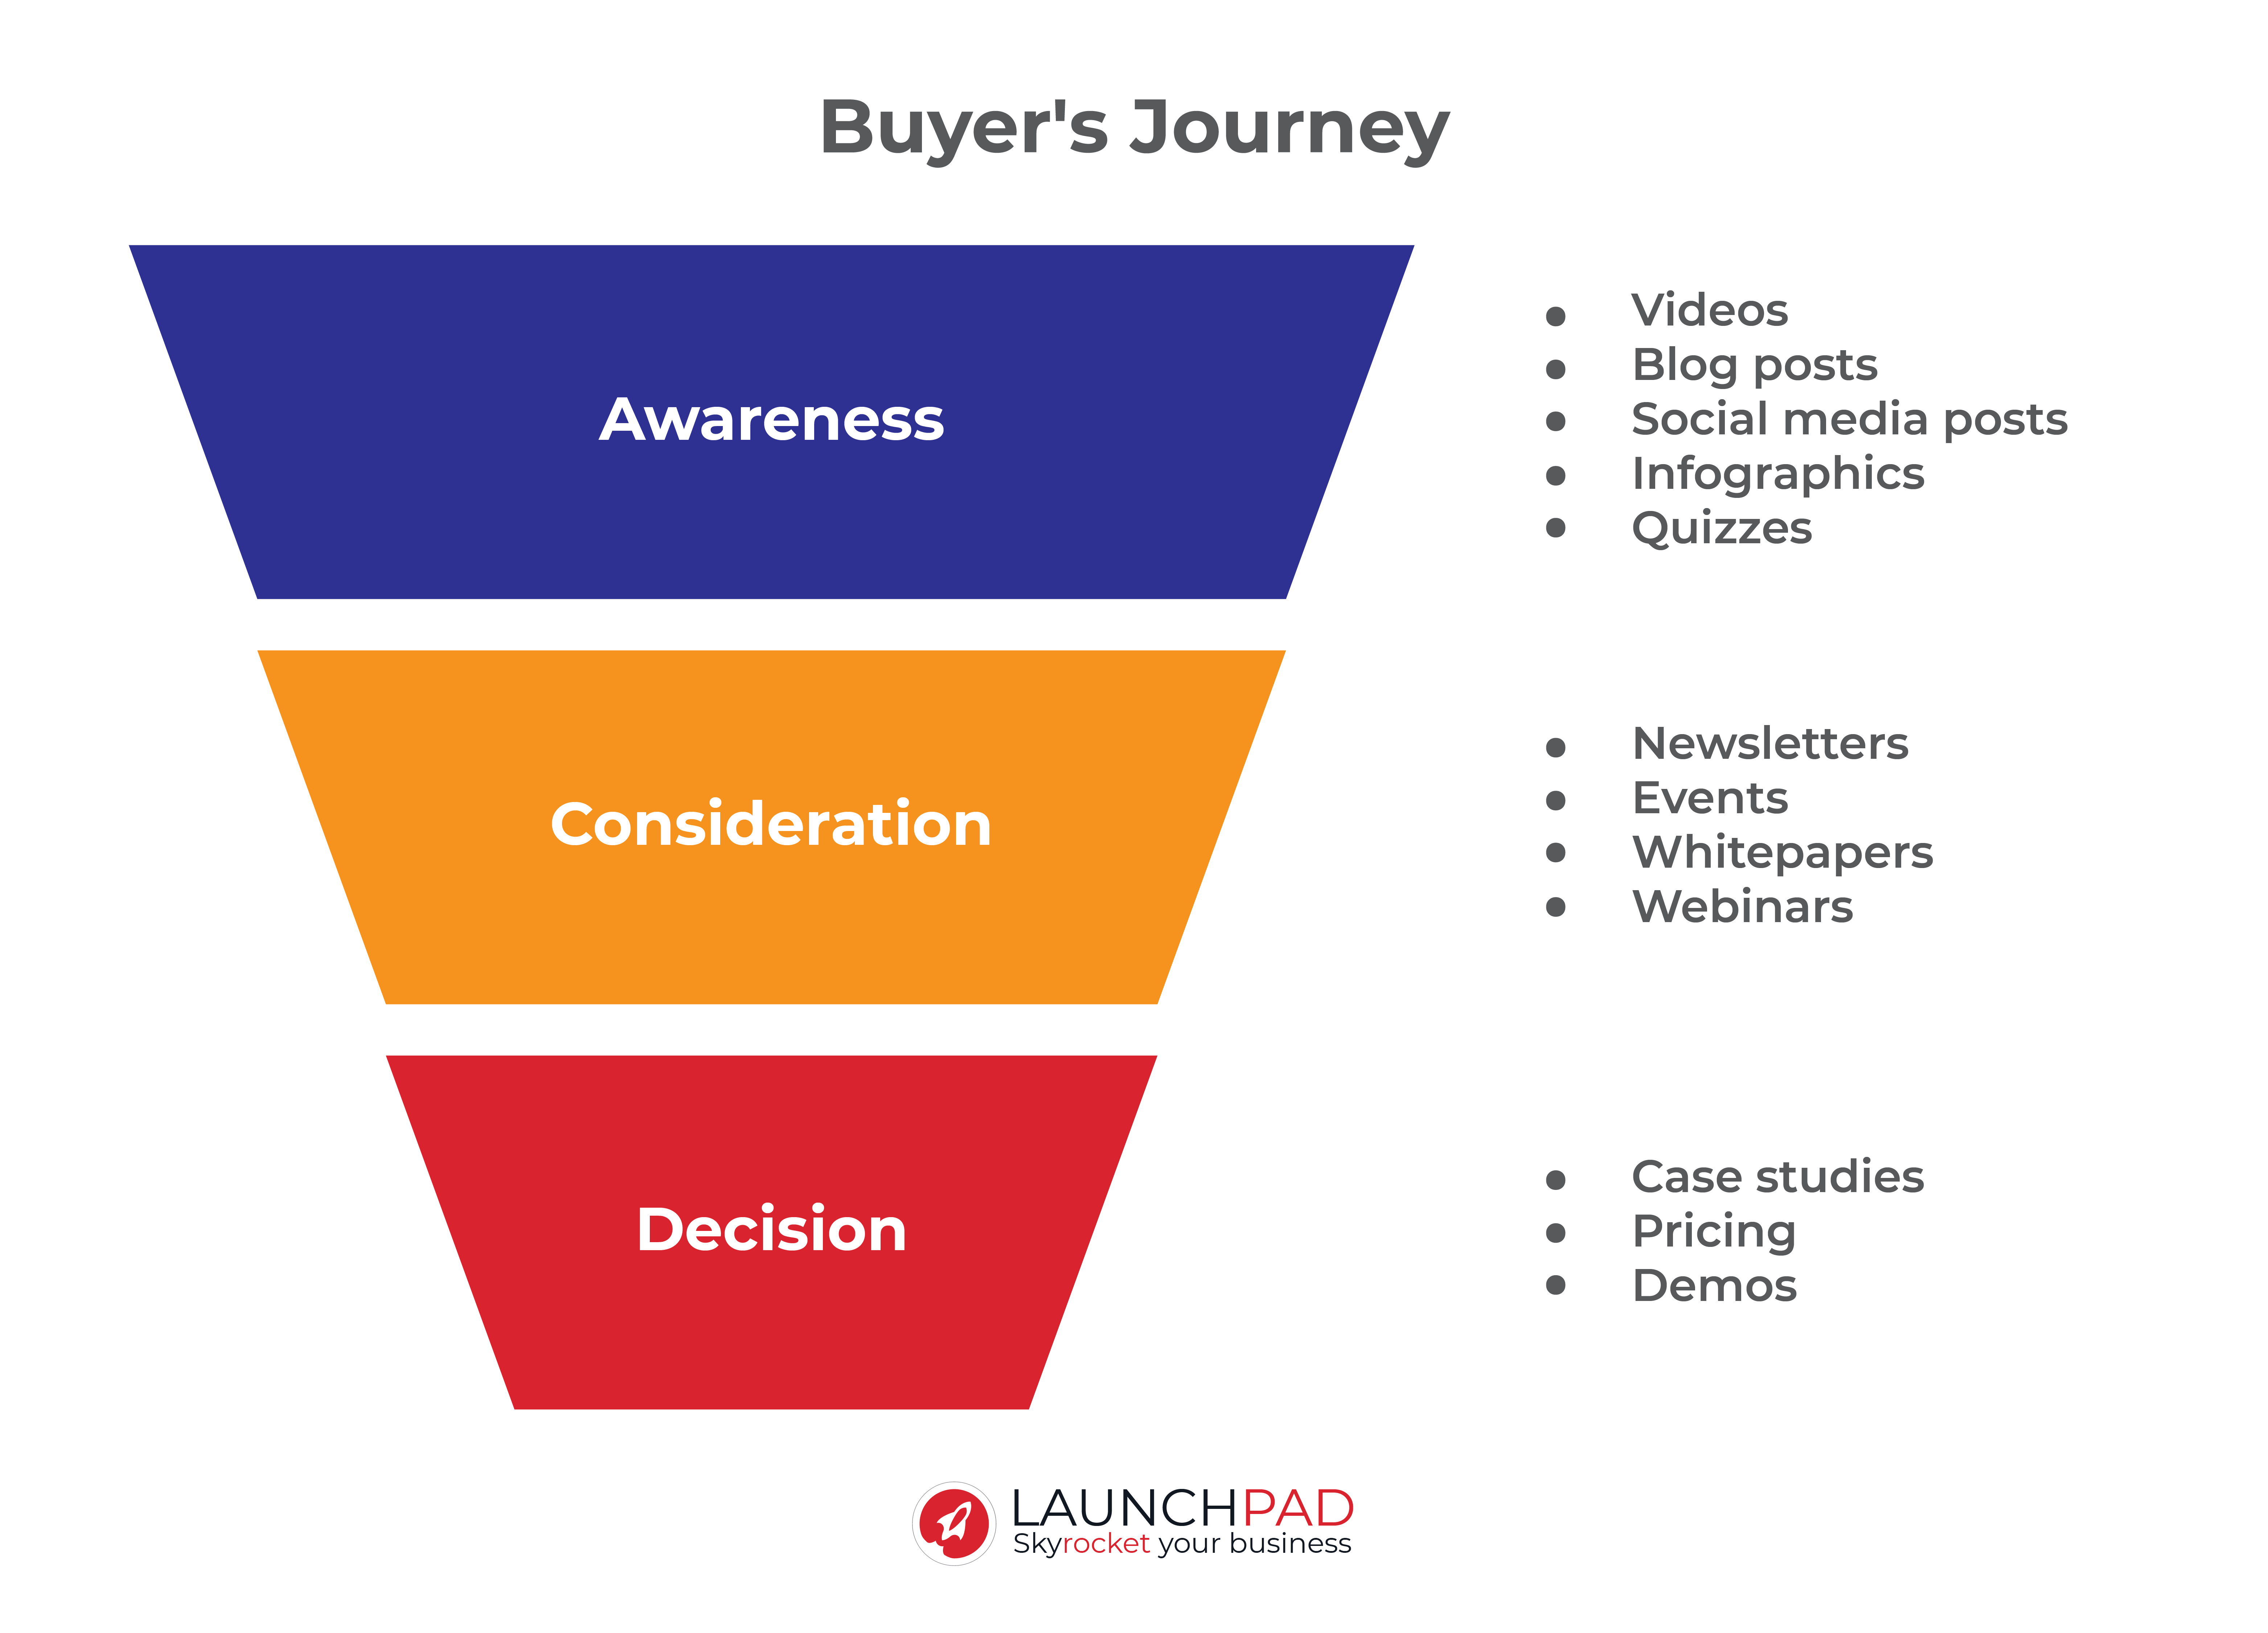 a buyer's journey